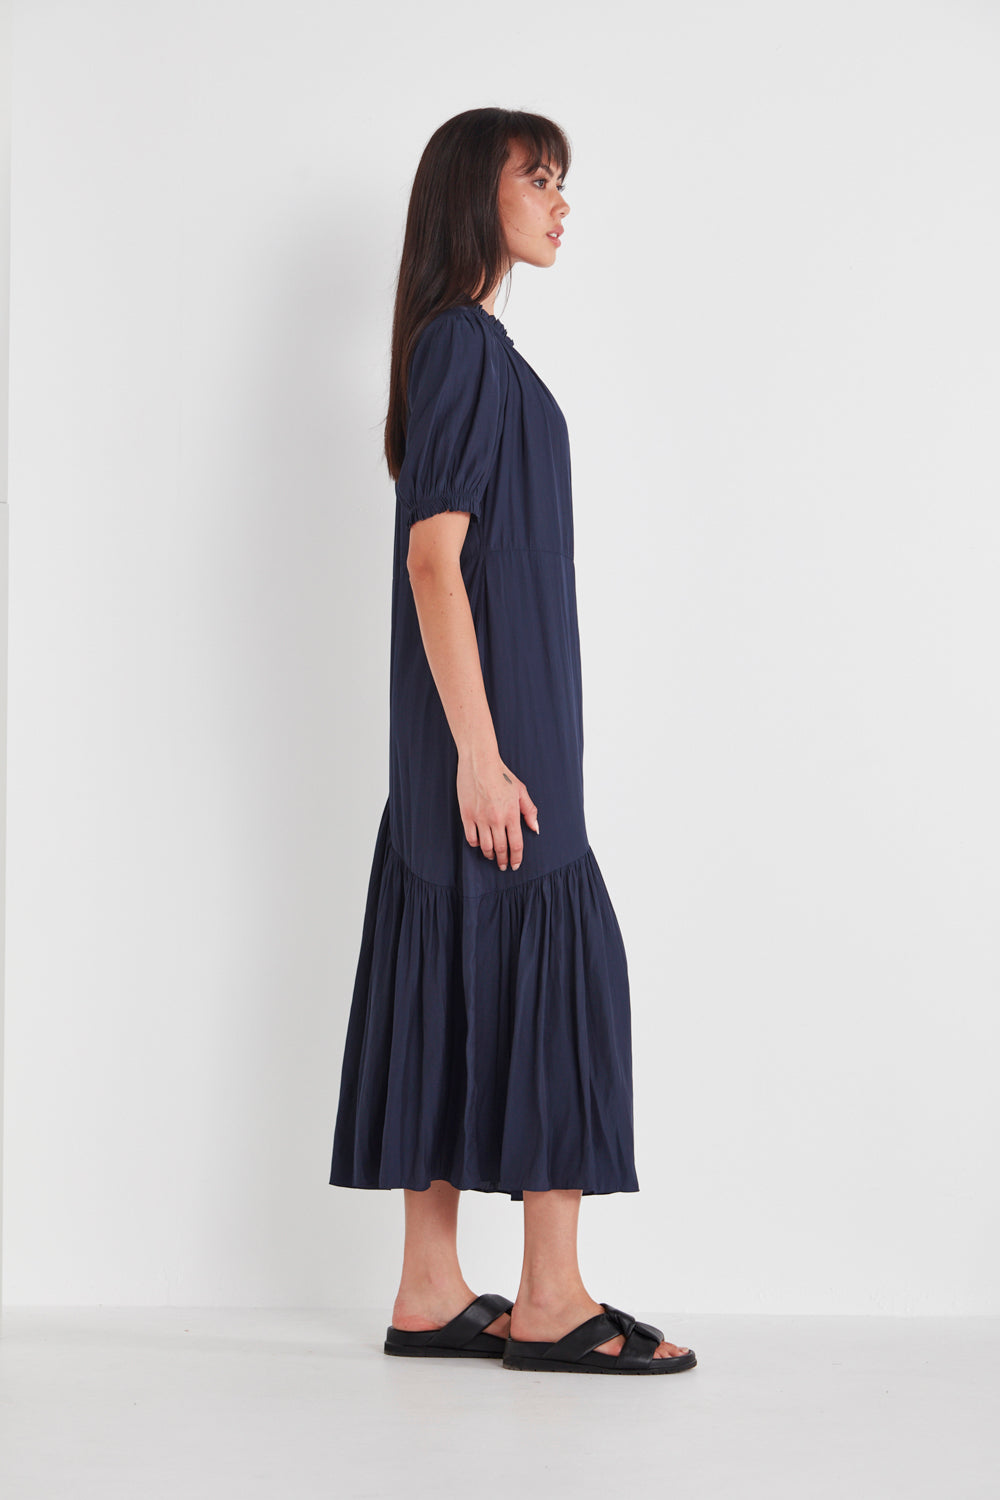 Reflection Dress - Blue Nova - Dress VERGE